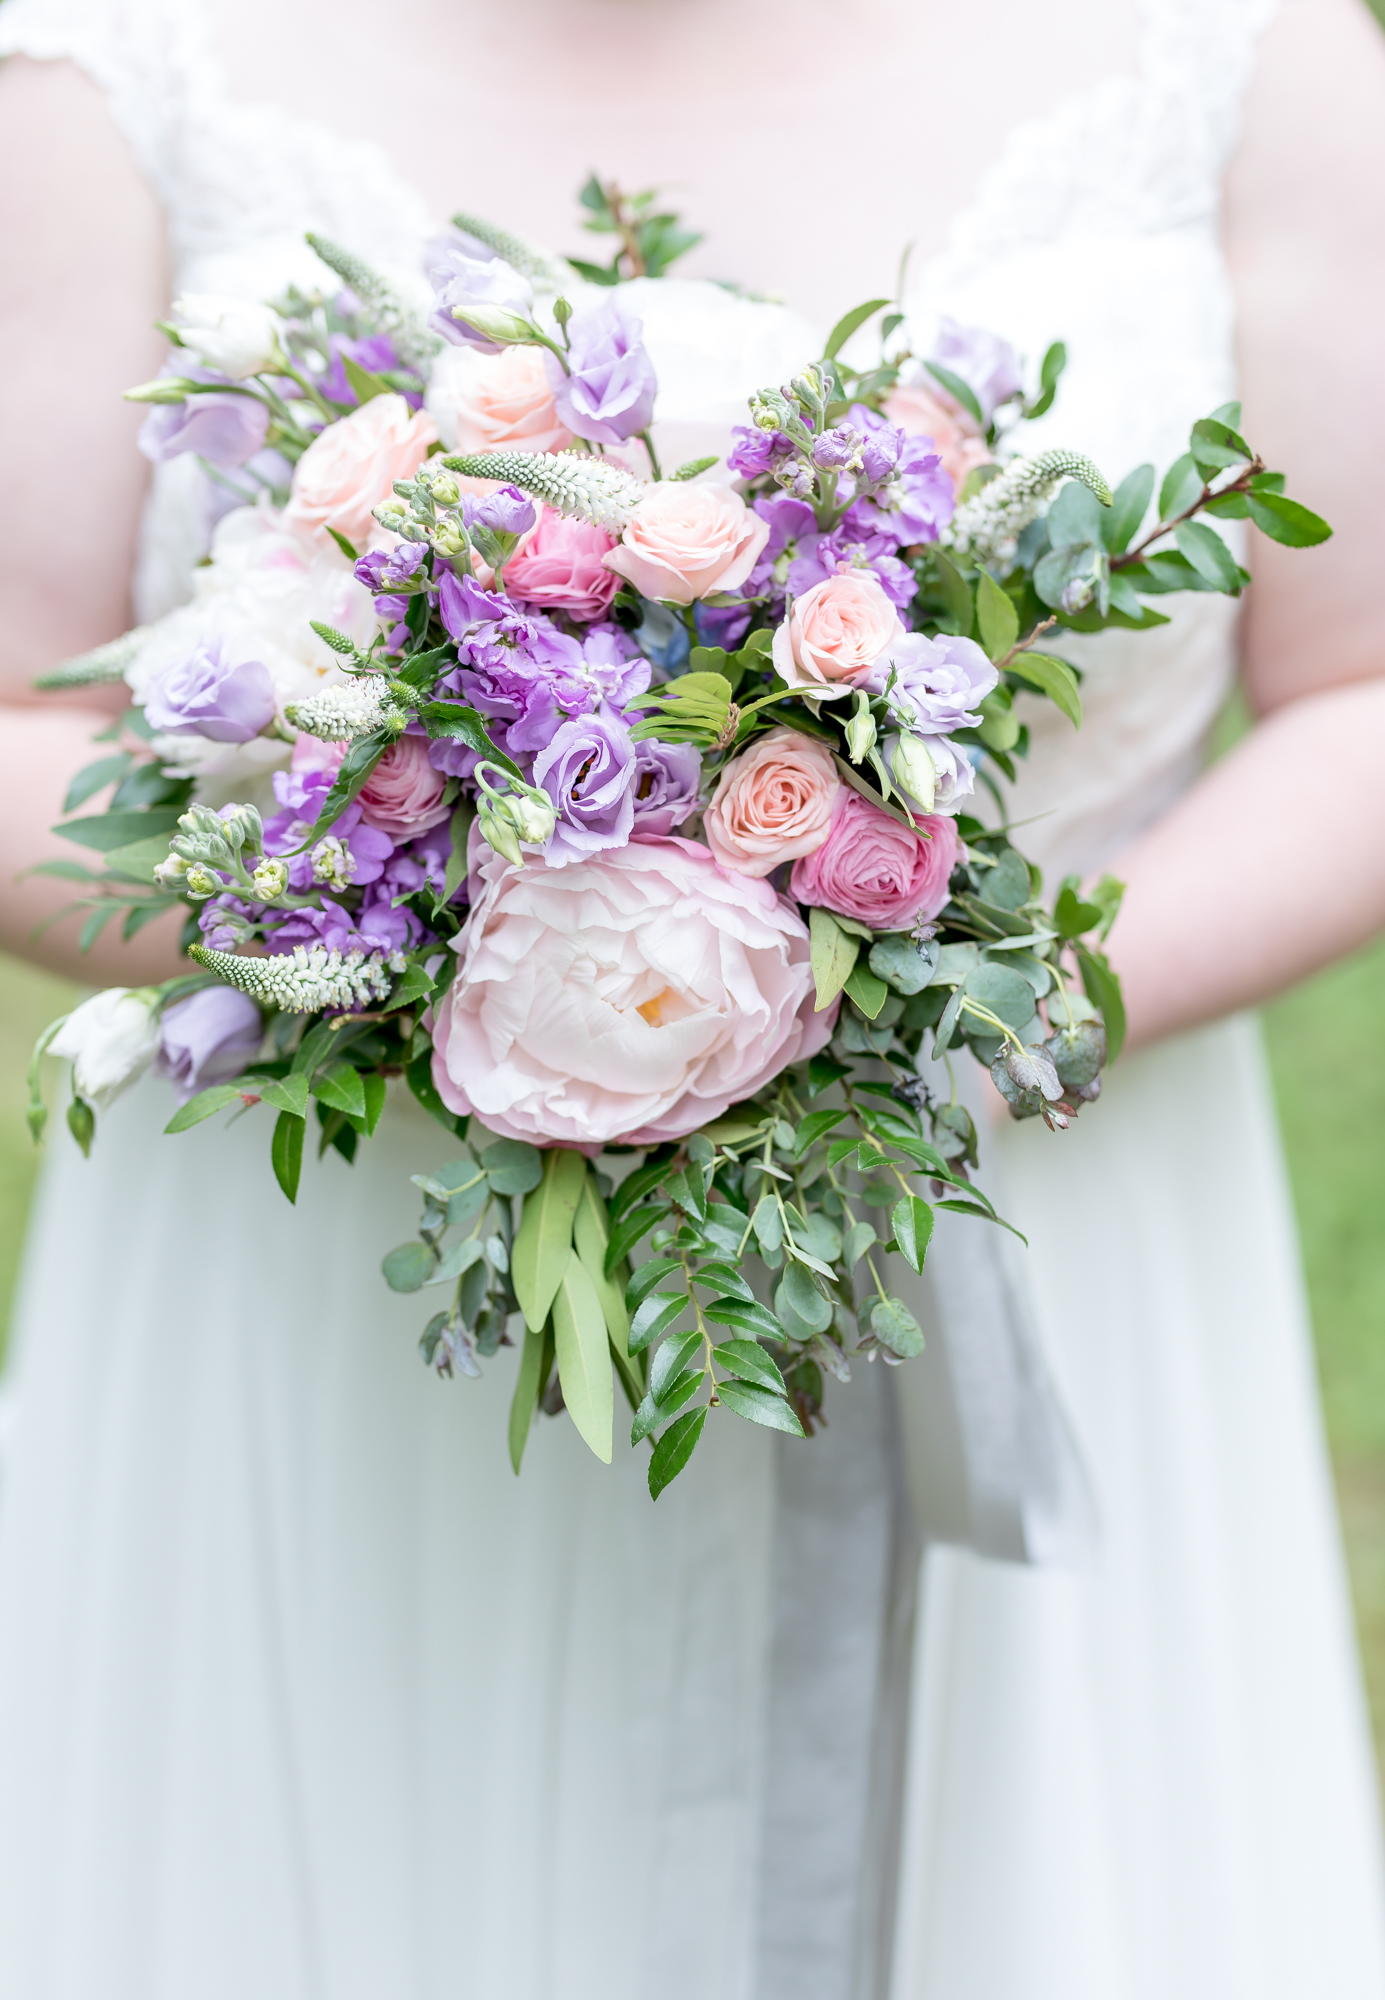 Weaver House of Pine Bend Park - Michigan Garden Wedding - The Overwhelmed Bride Wedding Blog